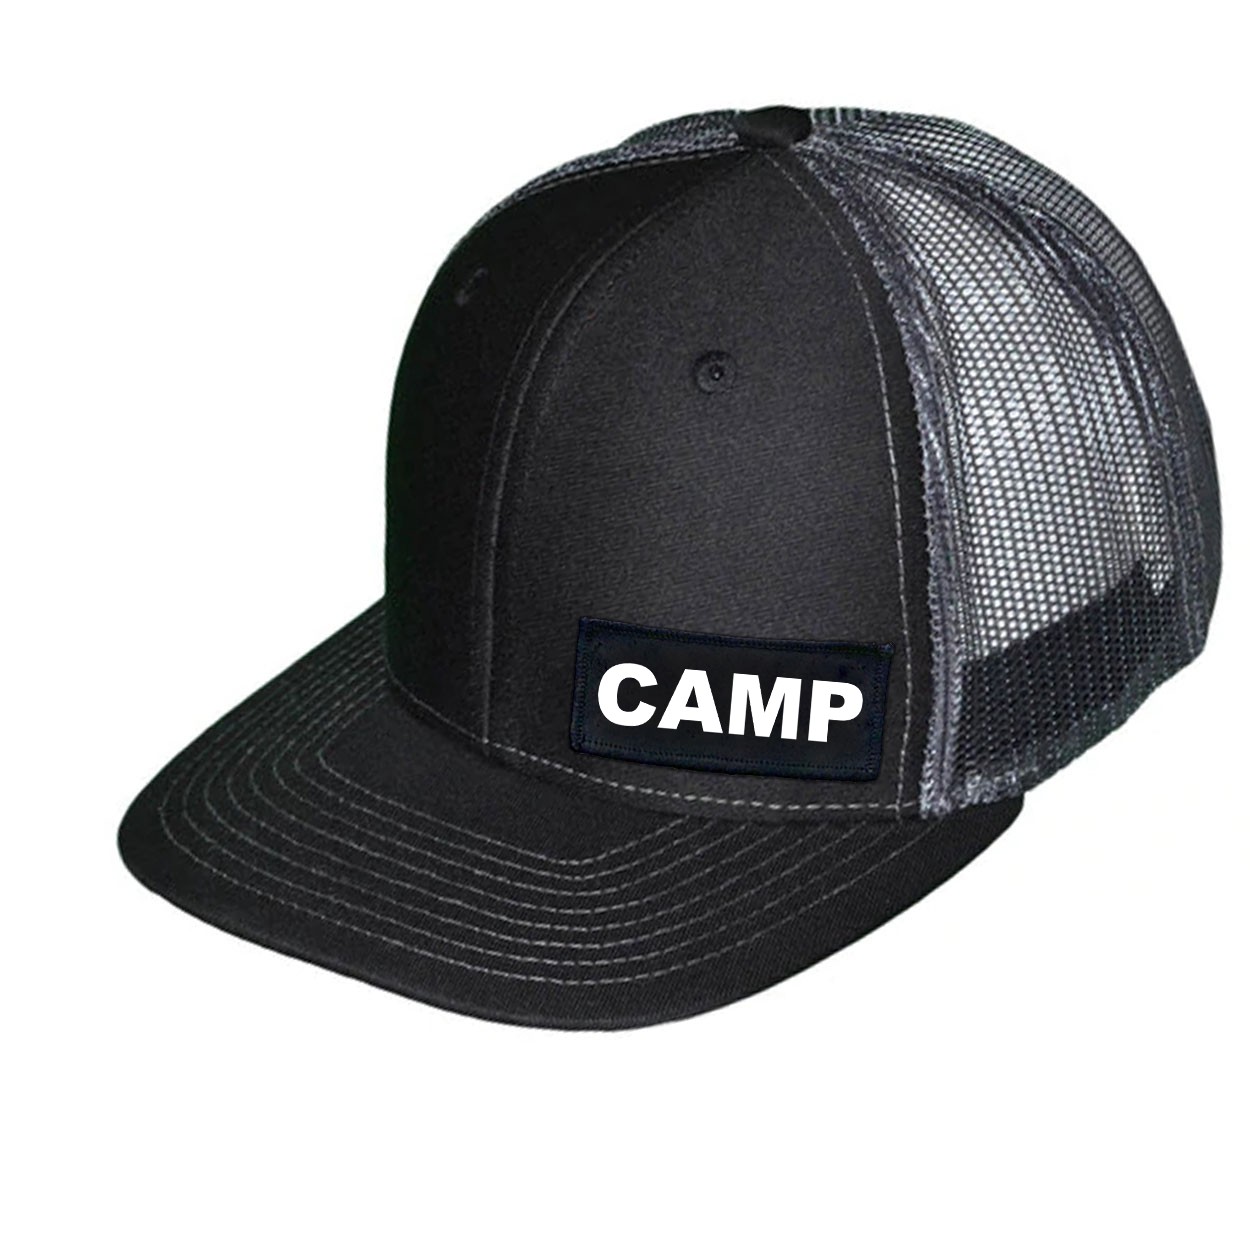 Camp Brand Logo Night Out Woven Patch Snapback Trucker Hat Black/Dark Gray (White Logo)